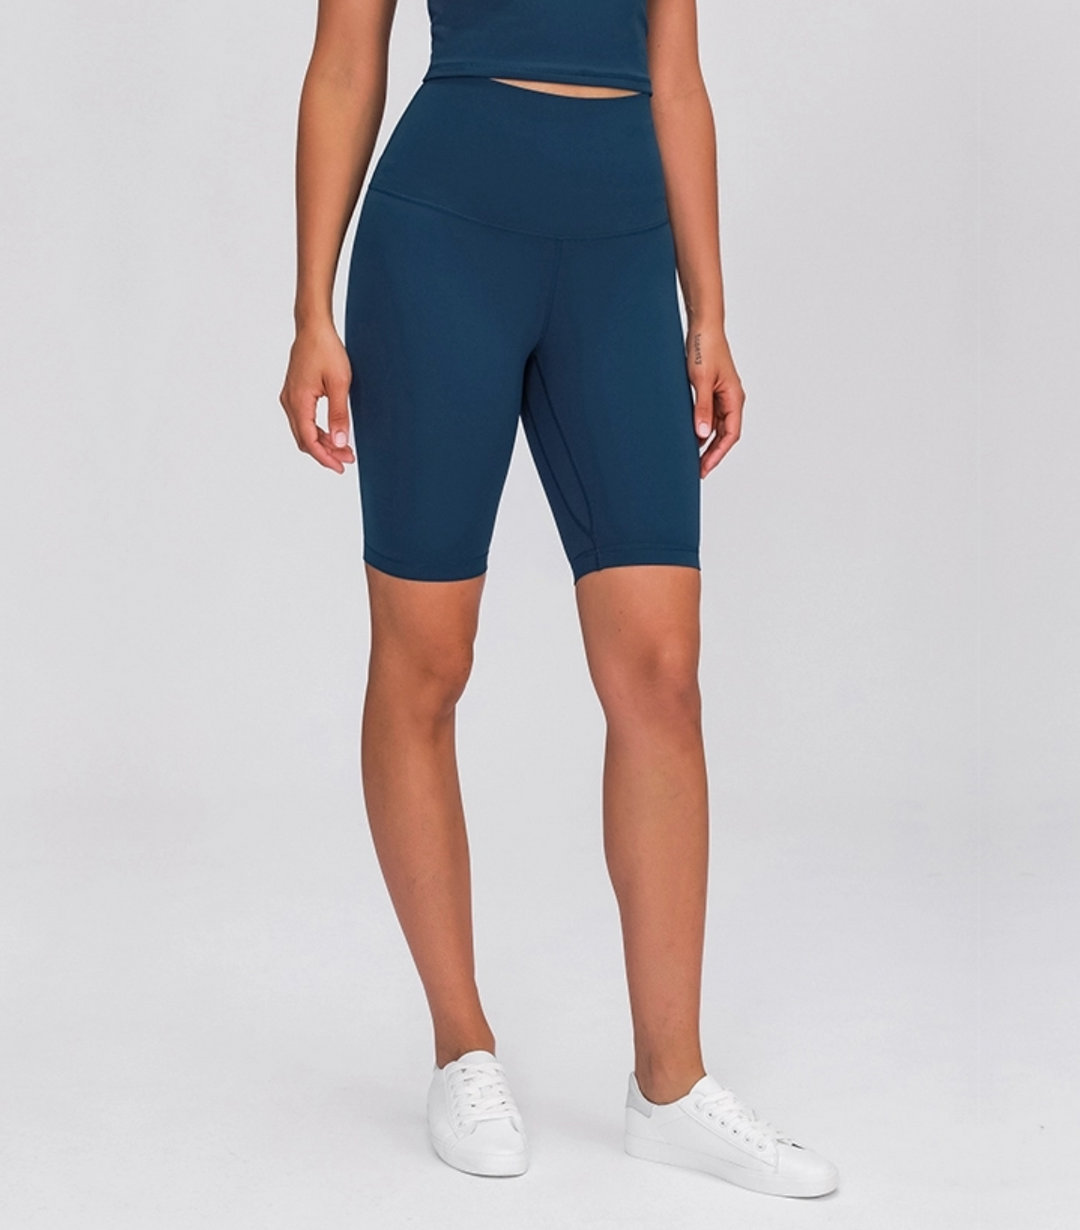 Easy Sprint 9” Shorts in Cobalt Blue